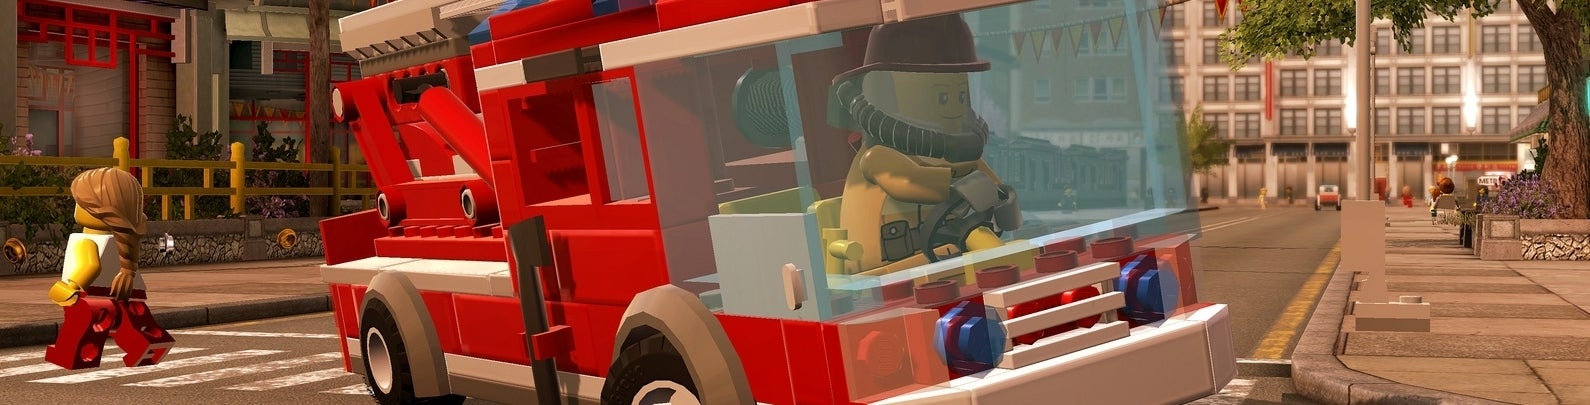 Imagen para Análisis de Lego City Undercover